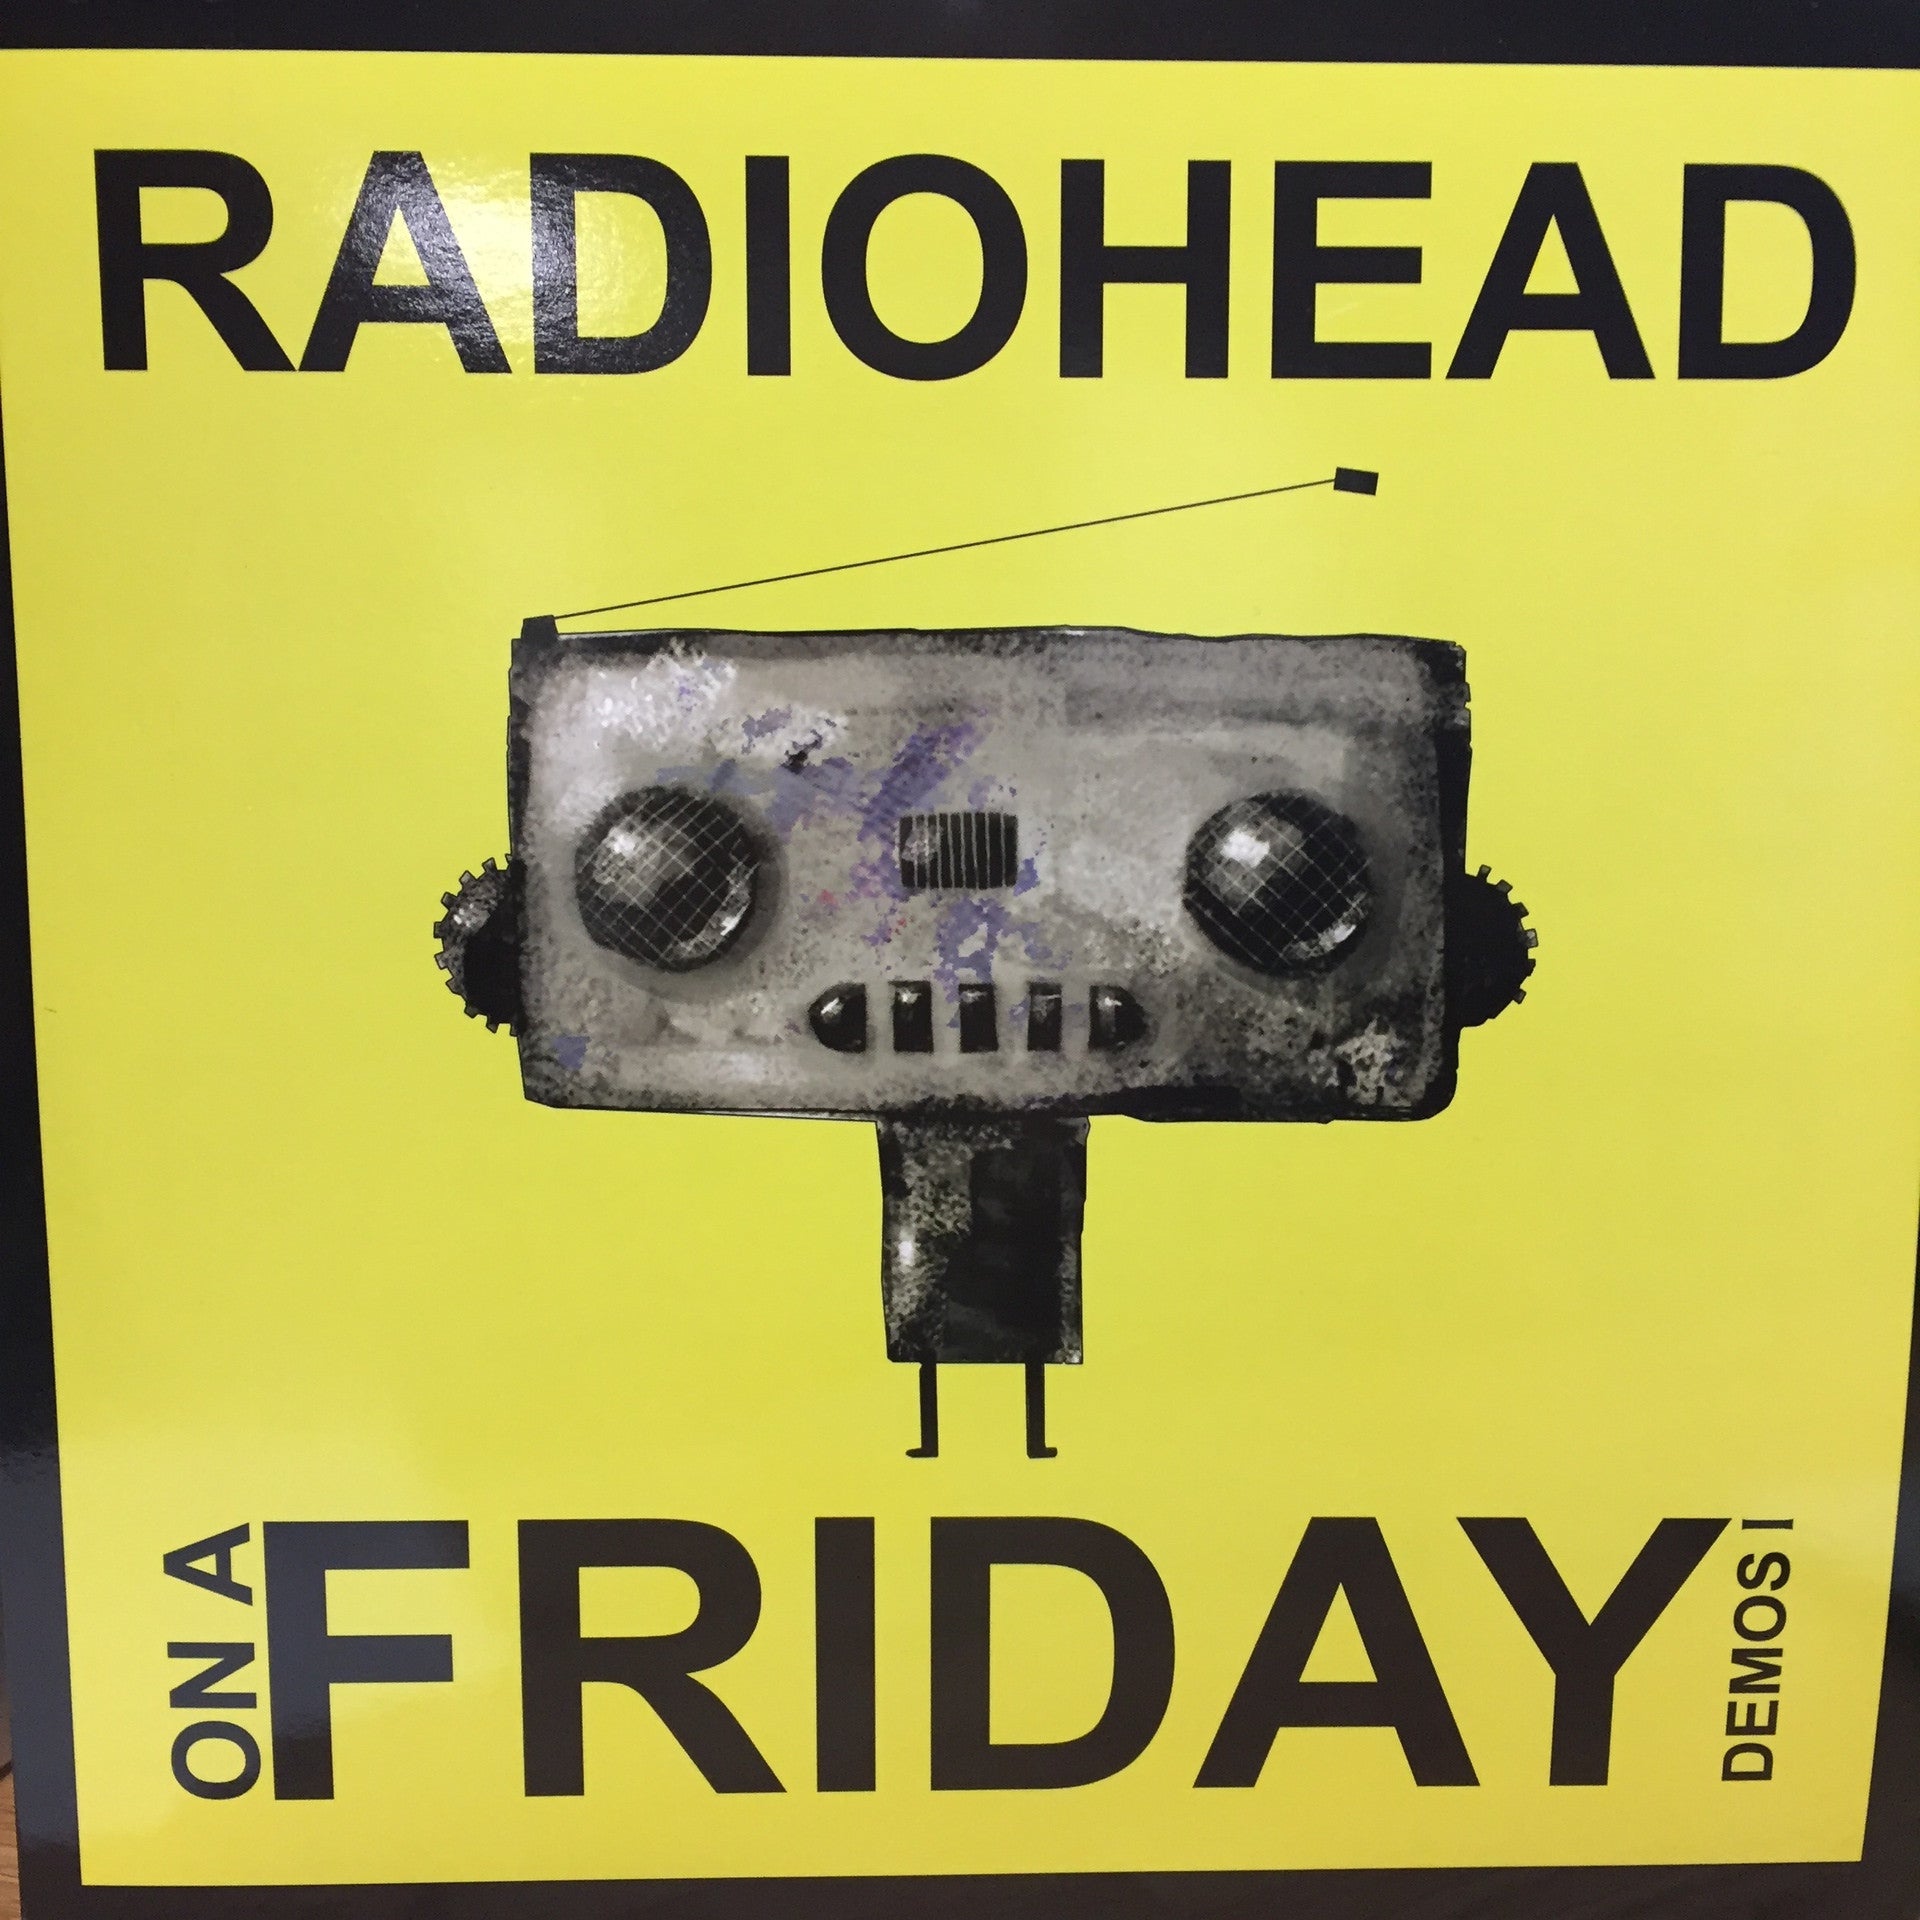 Radiohead ‎– On A Friday Demos 1 - New 2 LP Record 2018 German Colored Vinyl - Alternative Rock